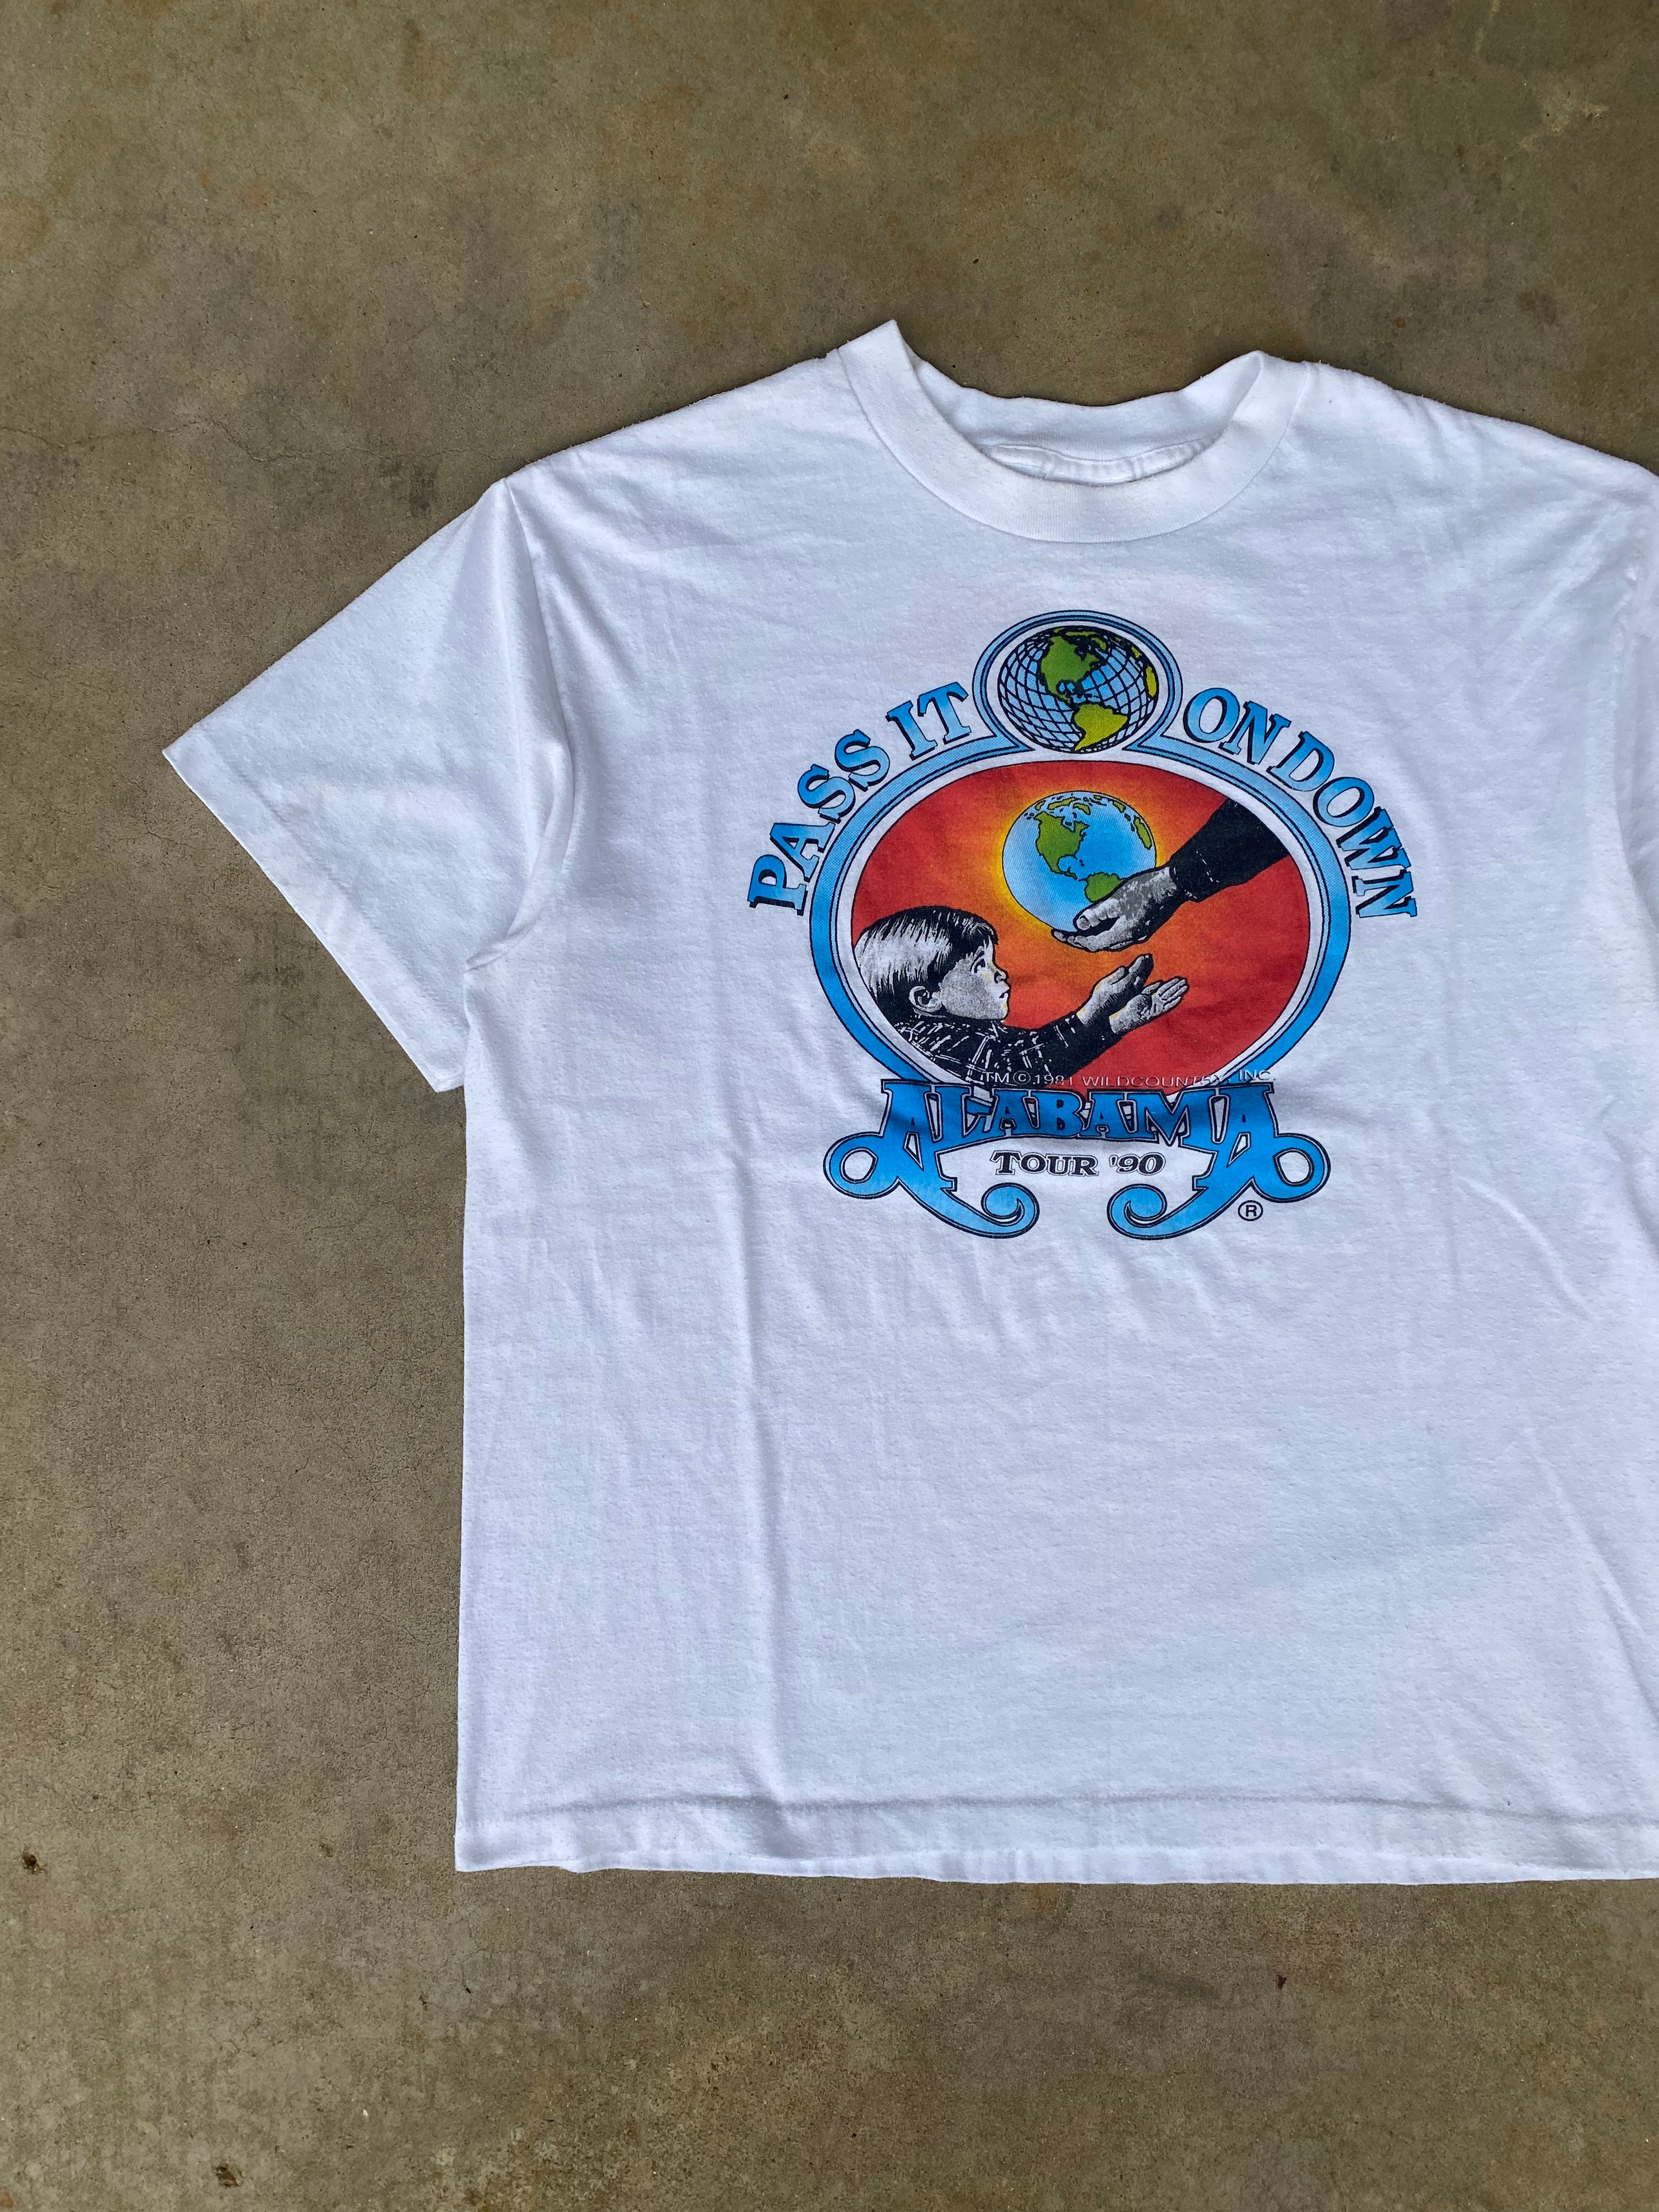 1990 Alabama “Pass it Down” Tour T-Shirt (L)